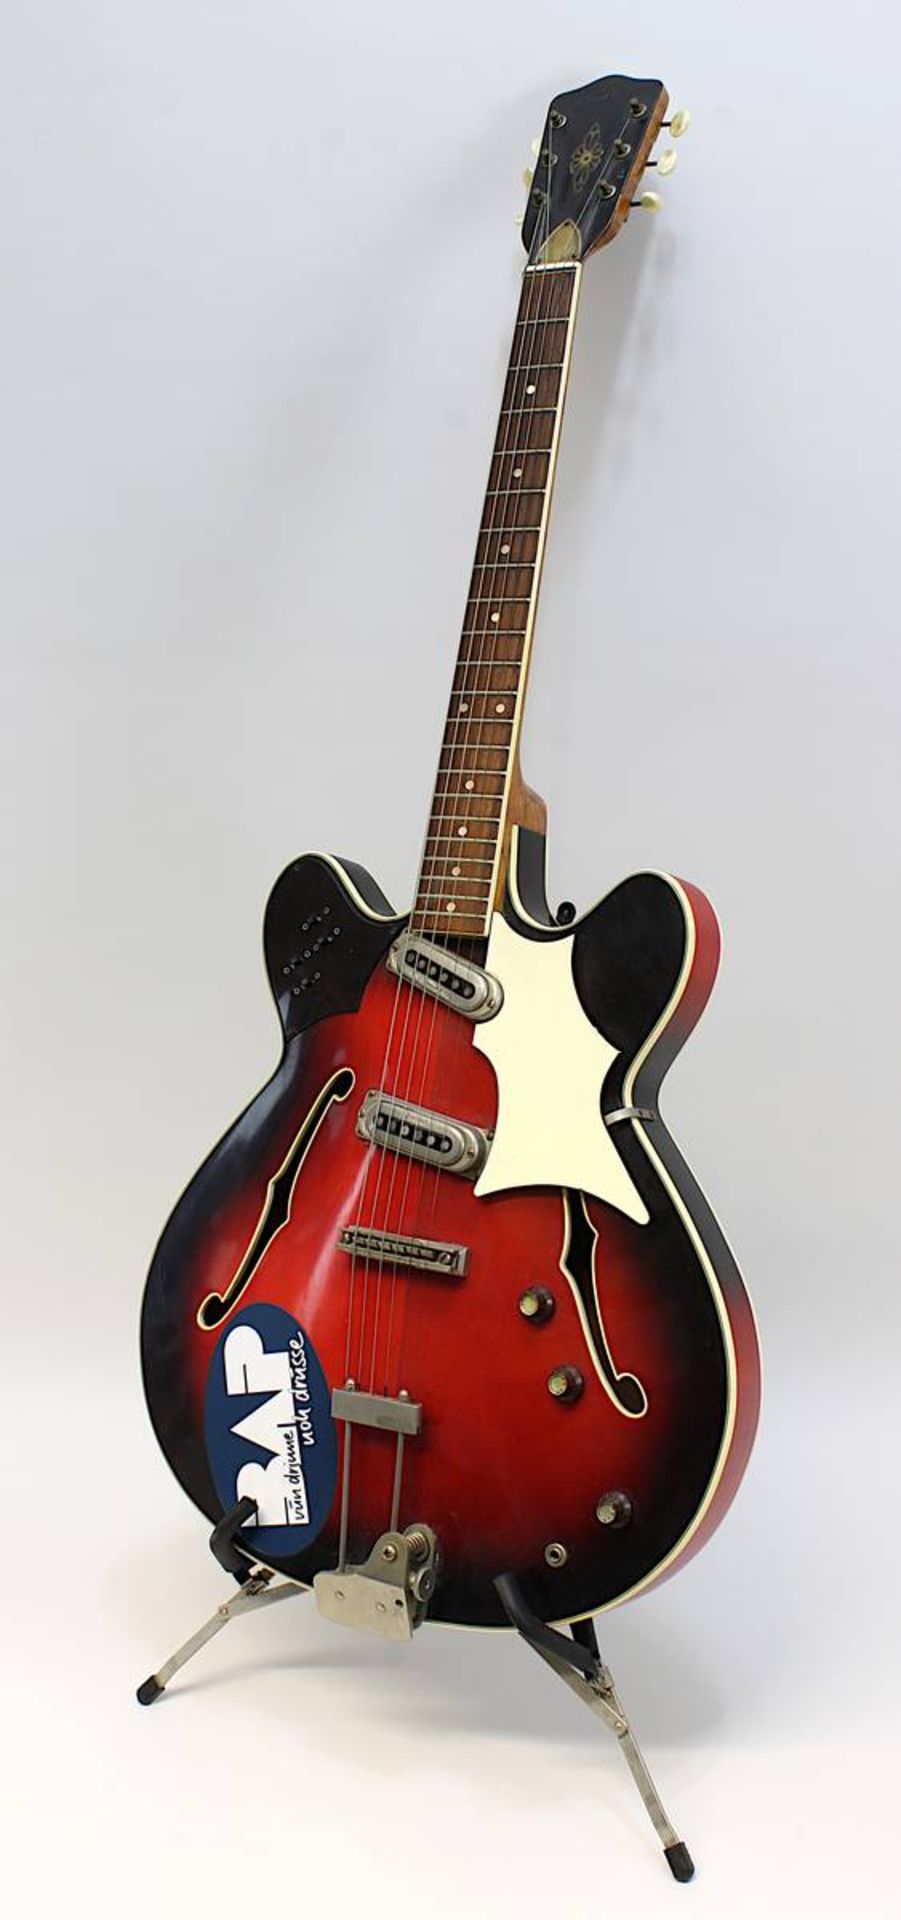 E-Gitarre Framus Raven, wohl A 113-54 T, um 1960/70, mit 6 Saiten, Holzgehäuse bordeauxrot lackiert,